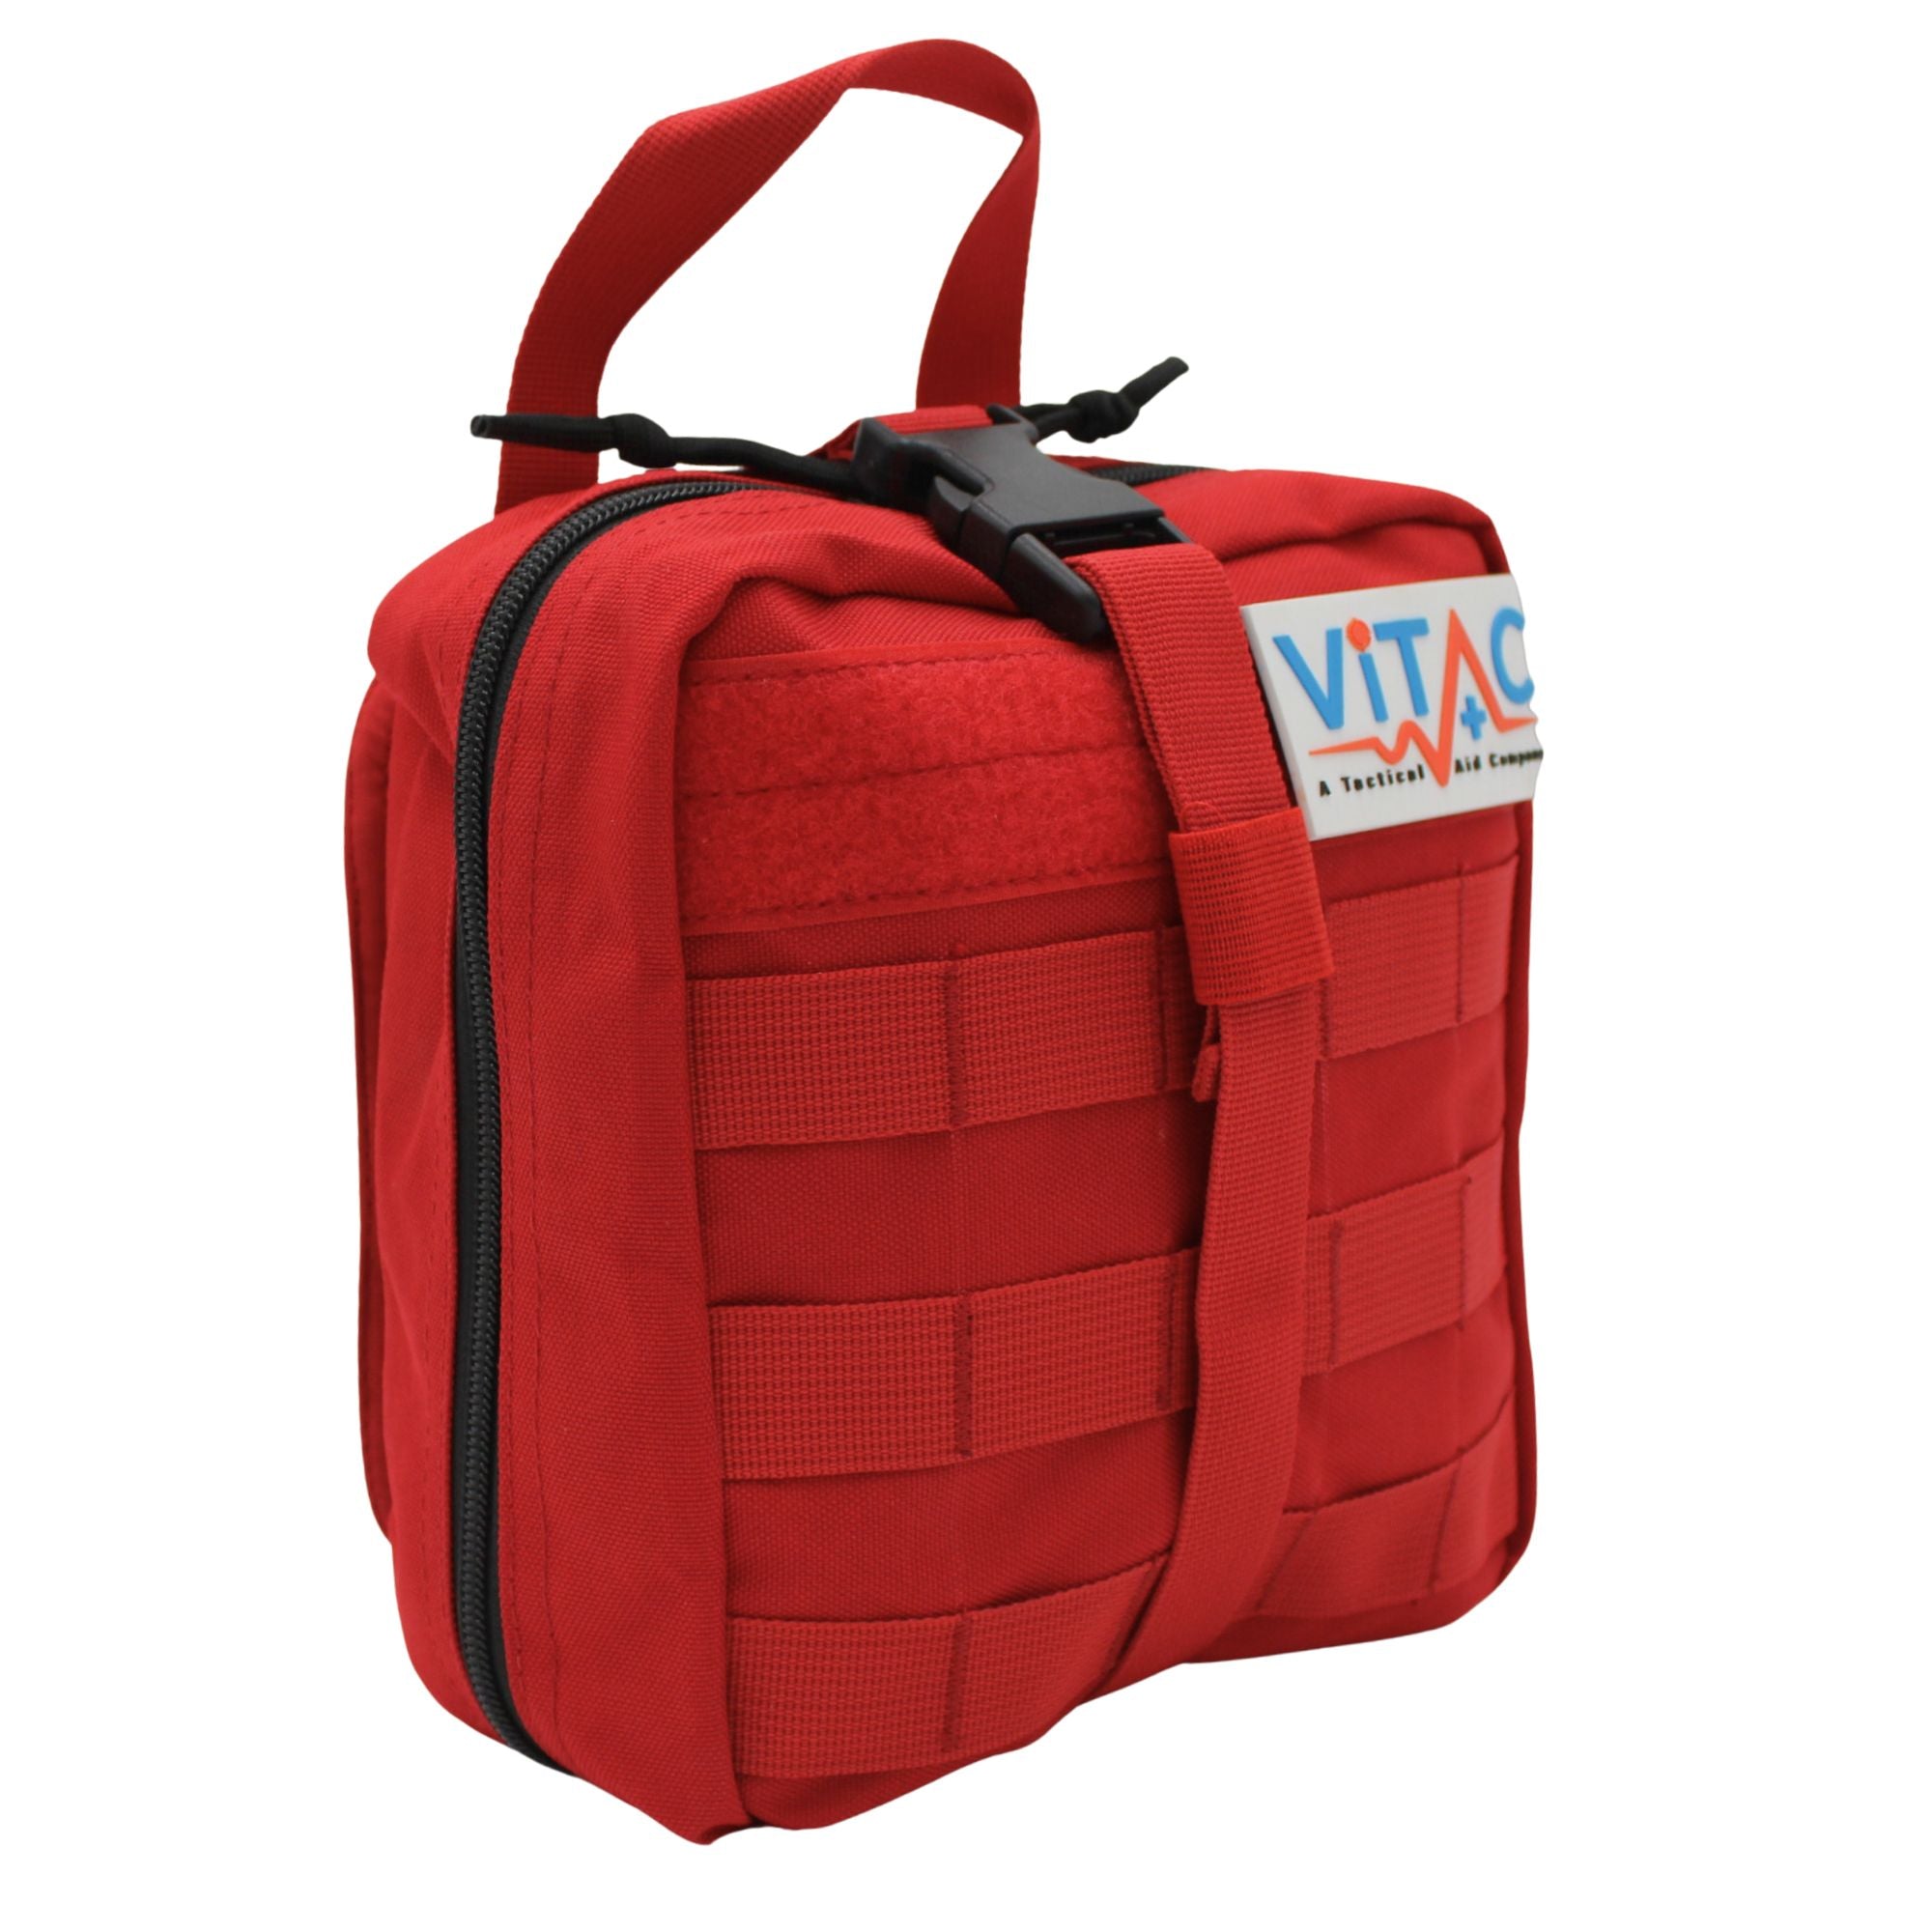 ViTAC Vehicle Plus Trauma Kit Emergency Survival Kit Red